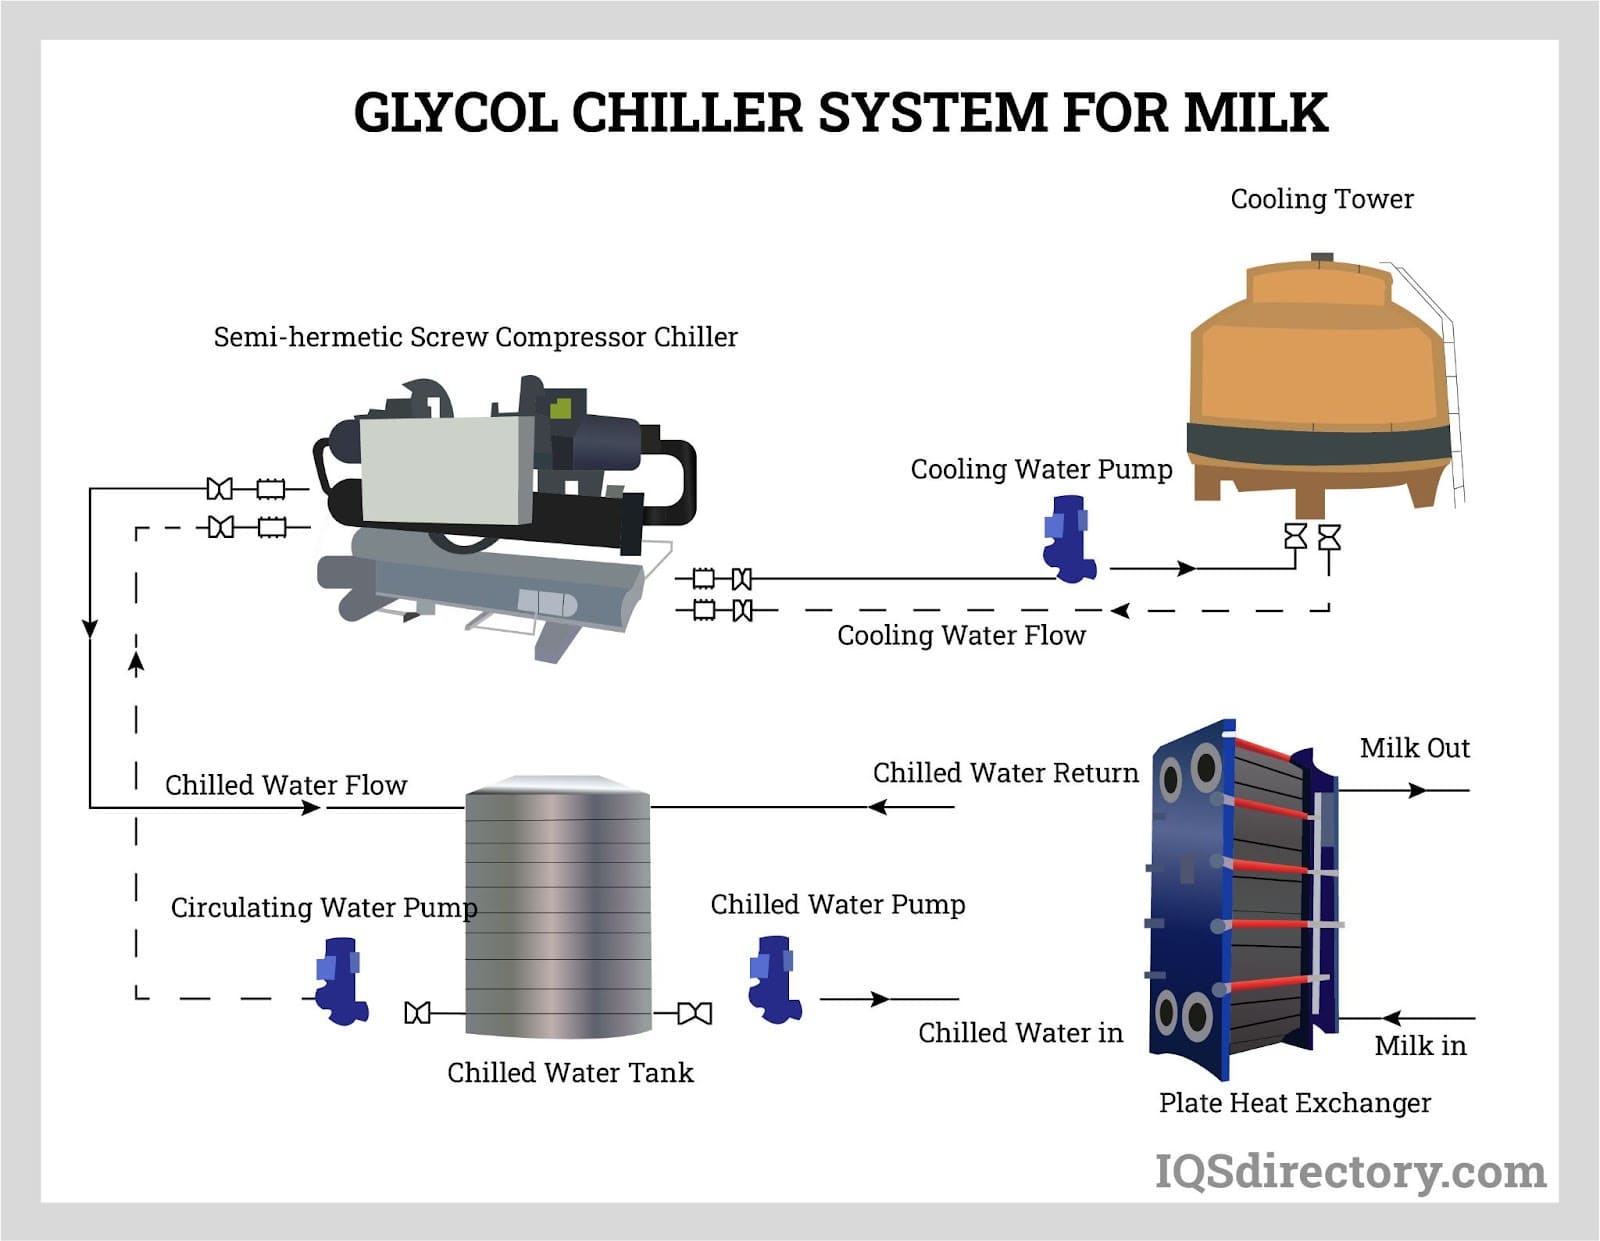 Glycol Chiller System for Milk